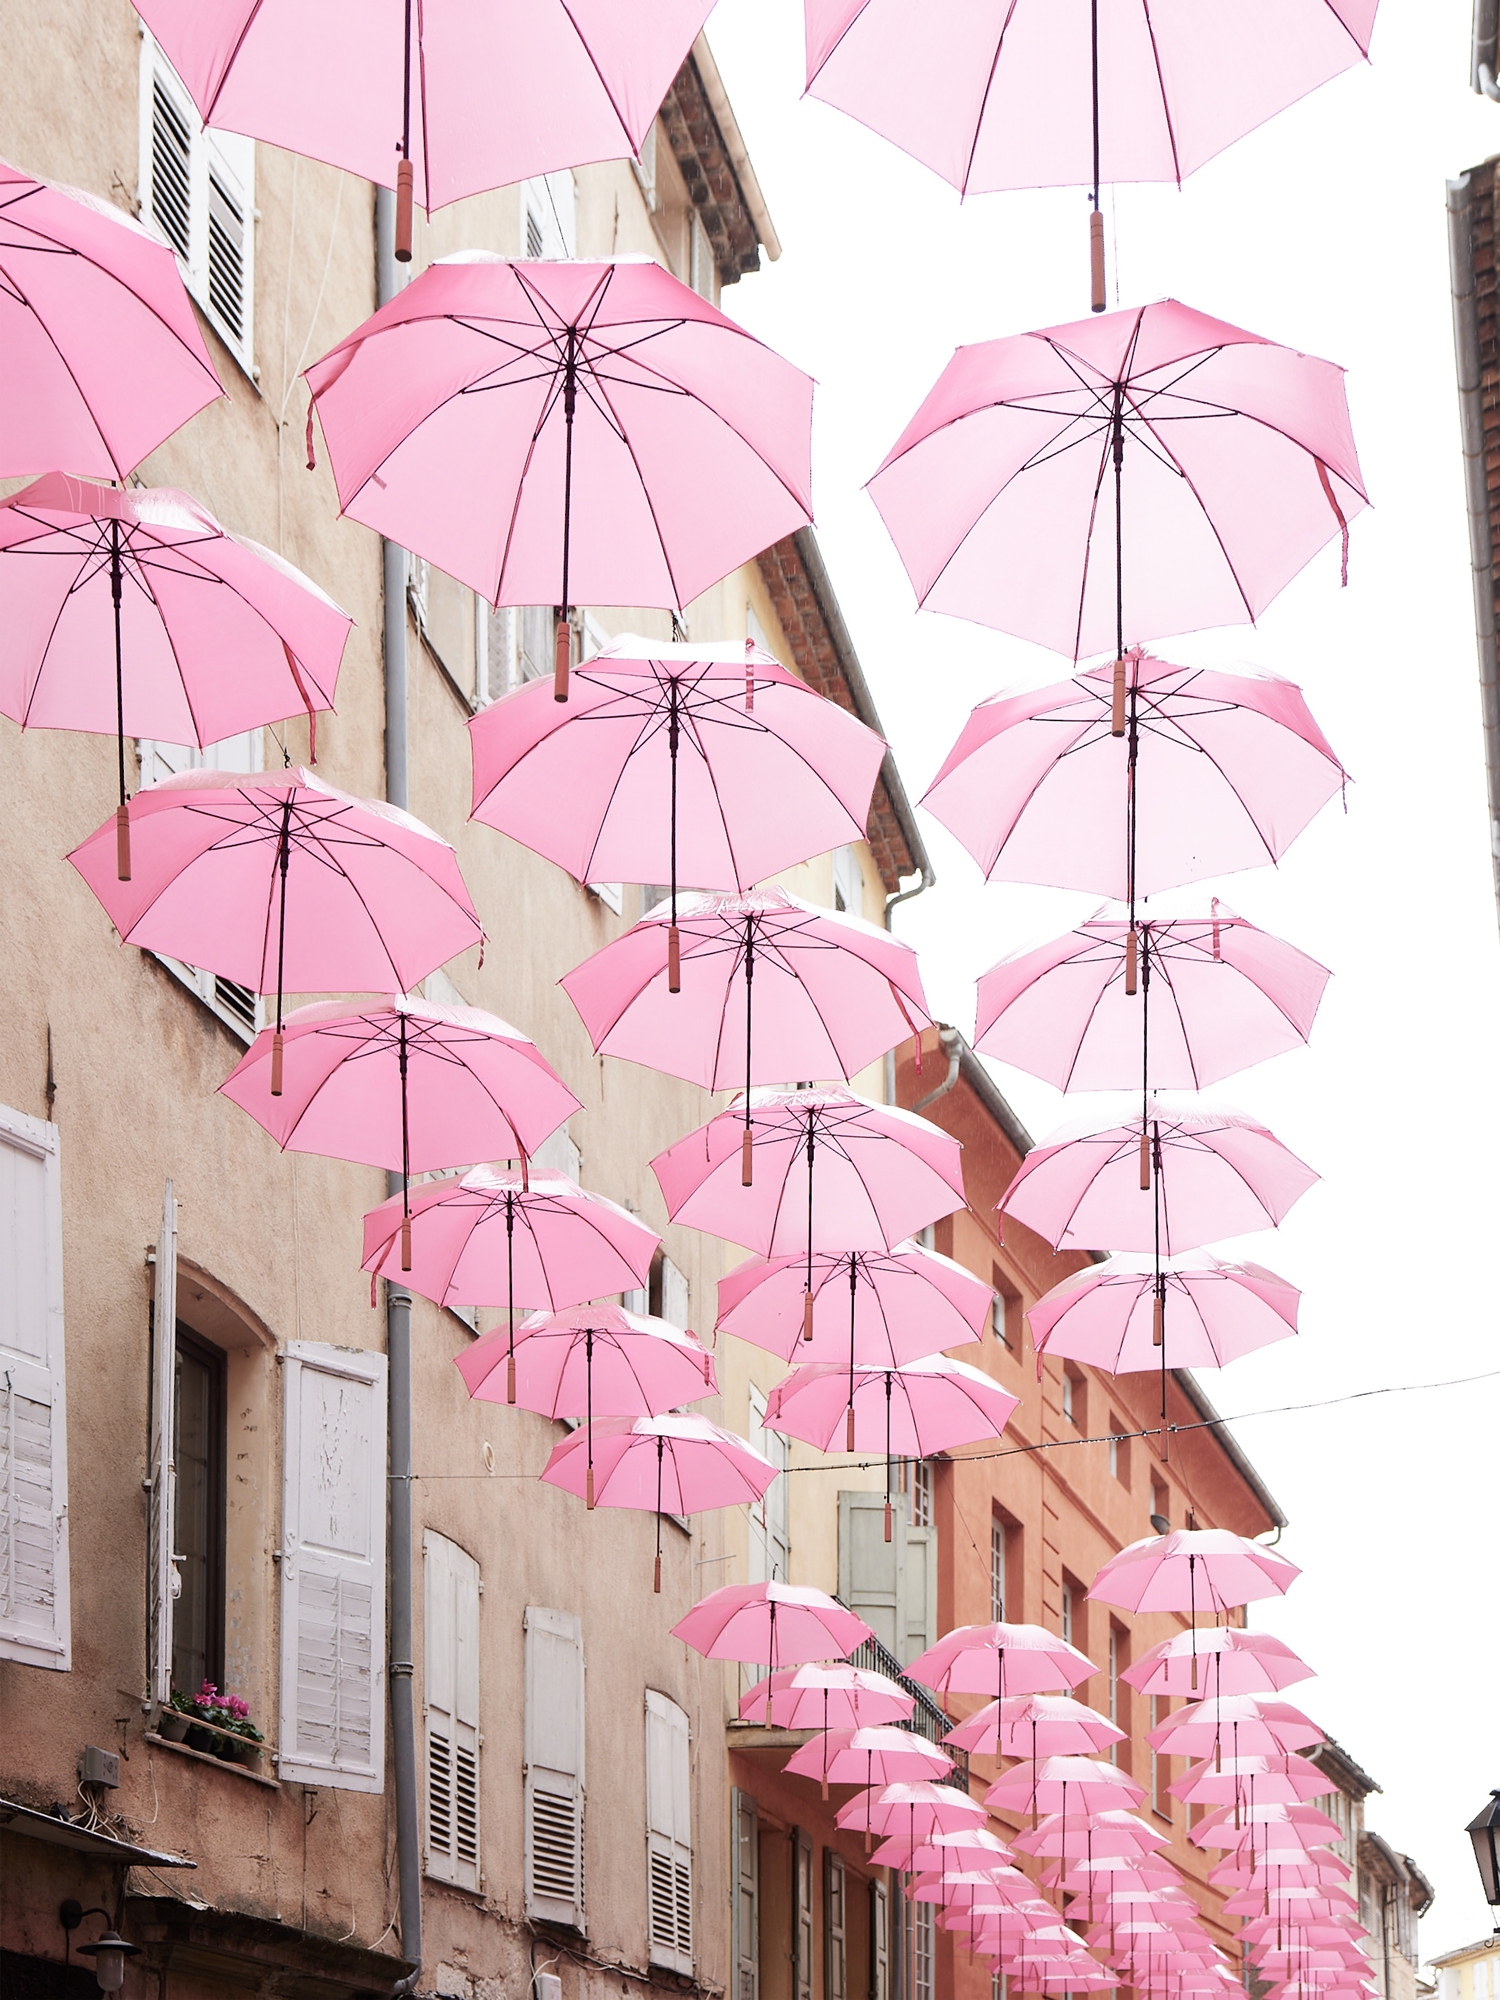 Lauren Krysti "Pink Umbrellas" Old Towne Grasse France 8"x10" Archival Print